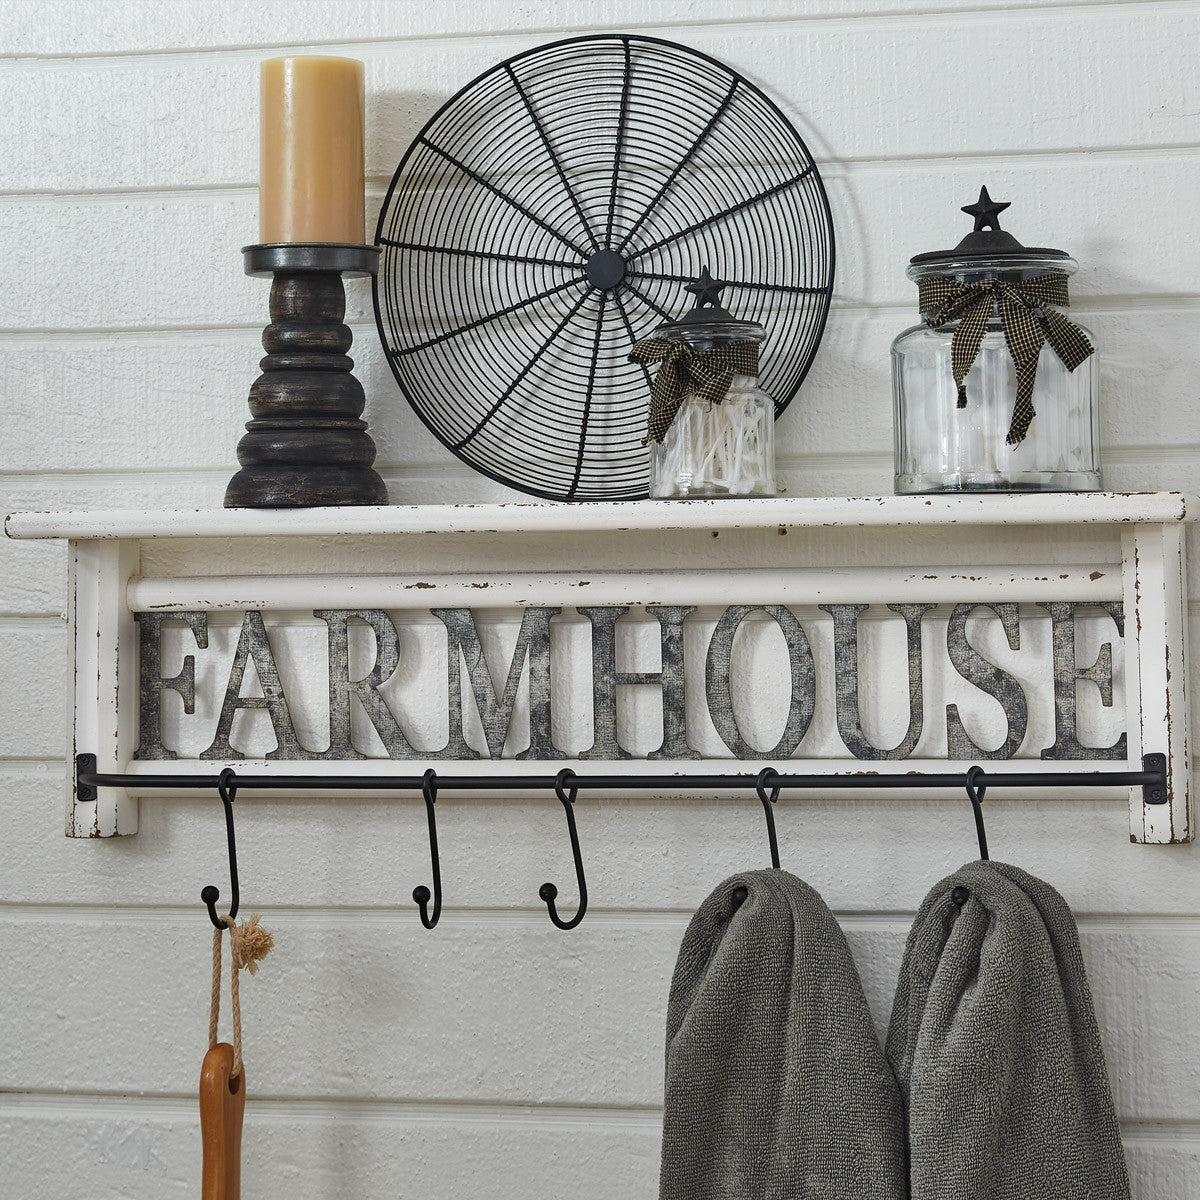 Farmhouse Wall Shelf